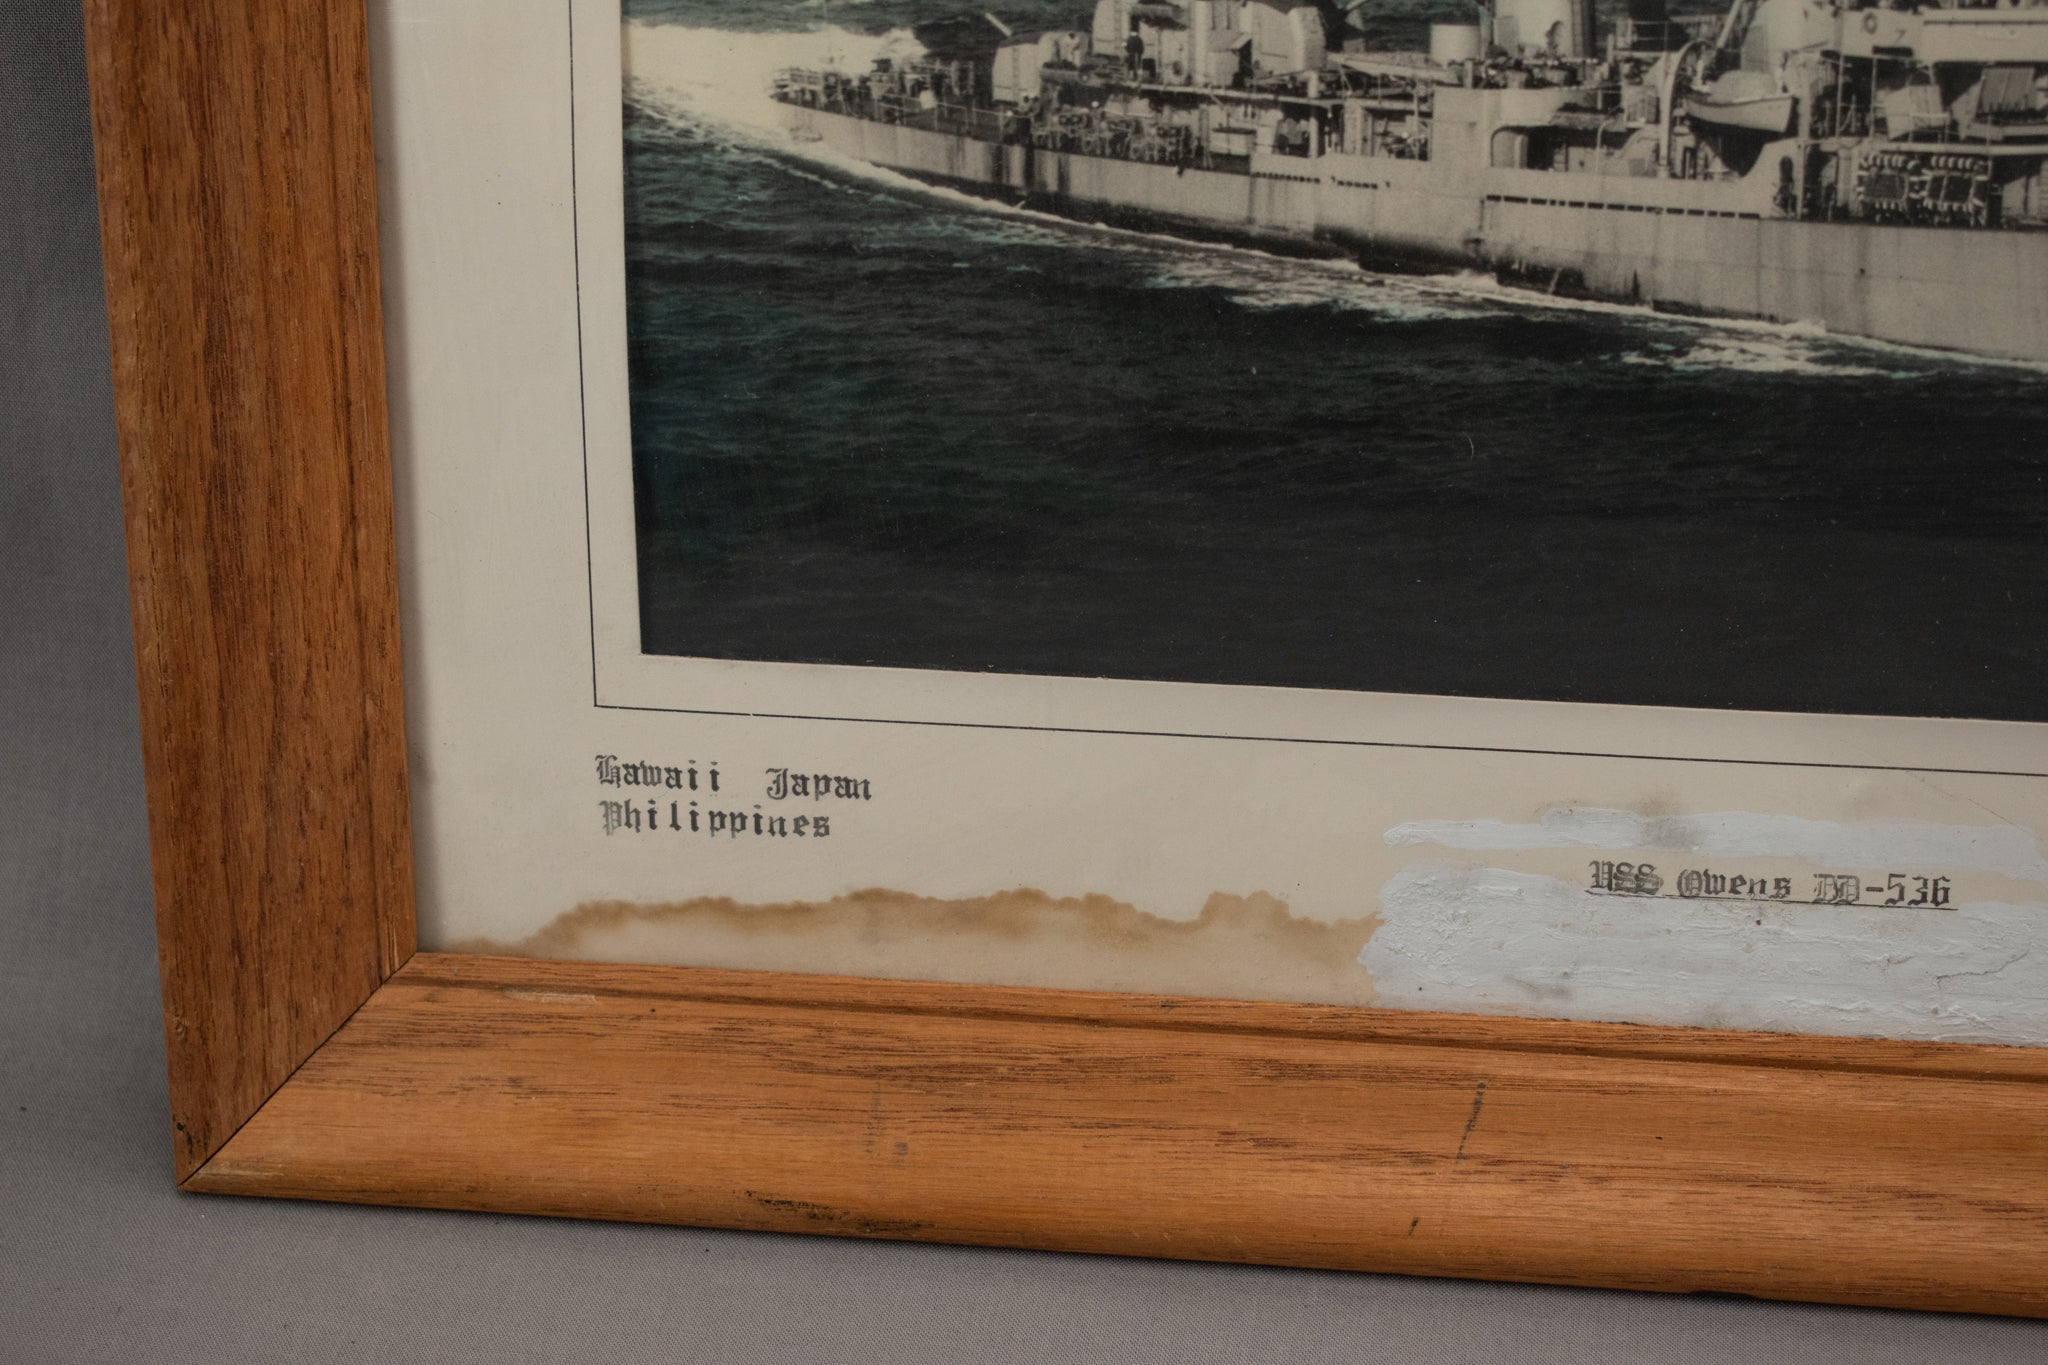 USS Owens DD-536 Philipines Japan Hong Kong Frame Photo 14x18"